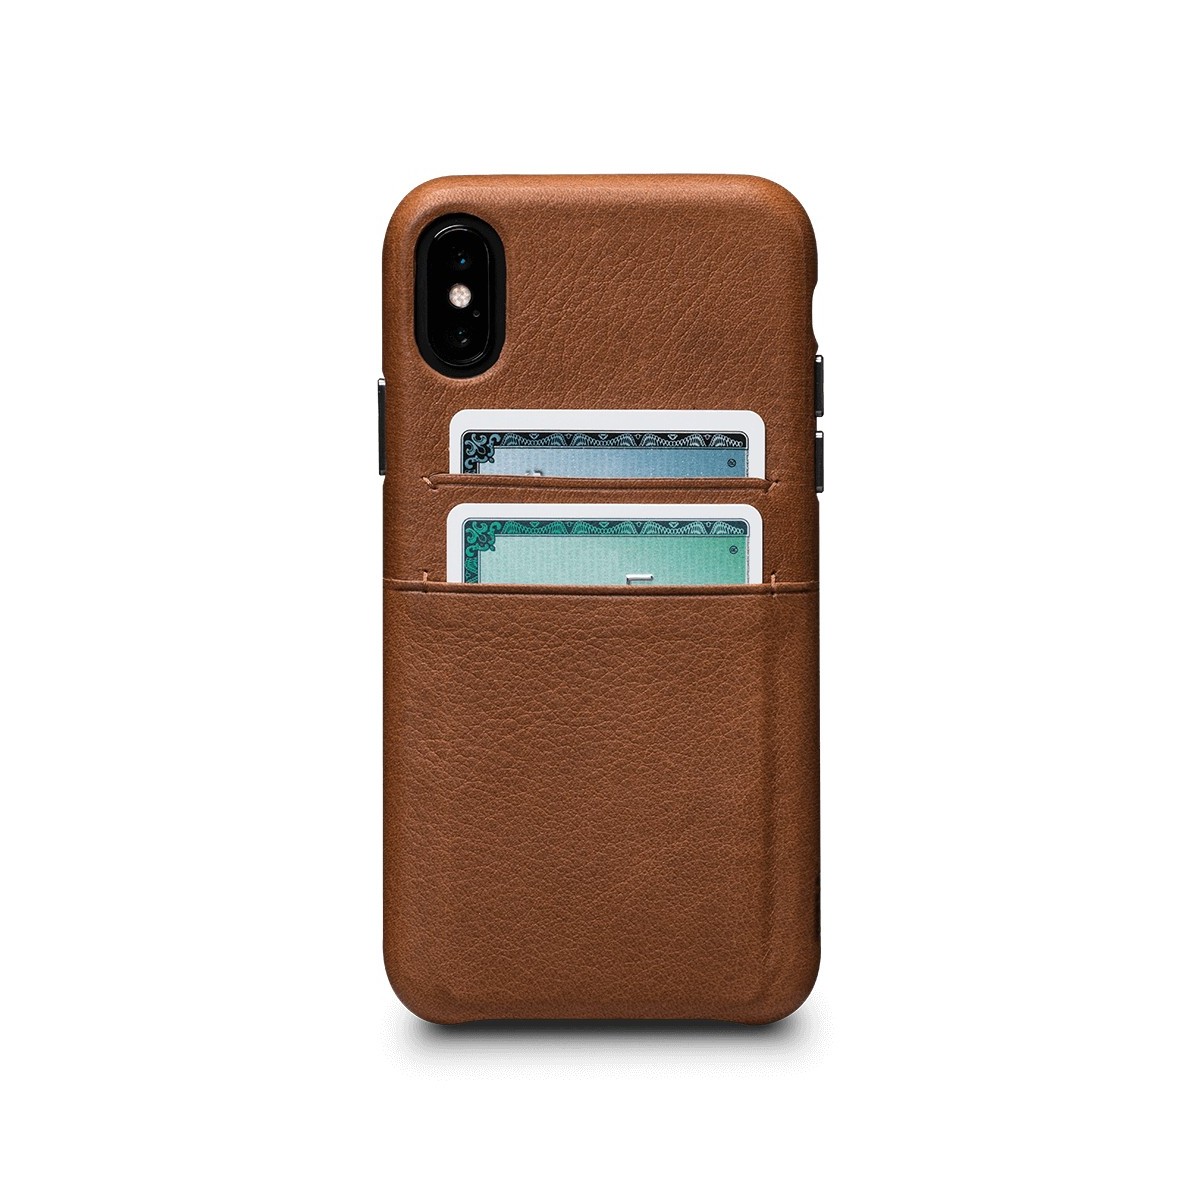 Coque iPhone Xs / iPhone X en cuir véritable porte-cartes marron - Sena Cases